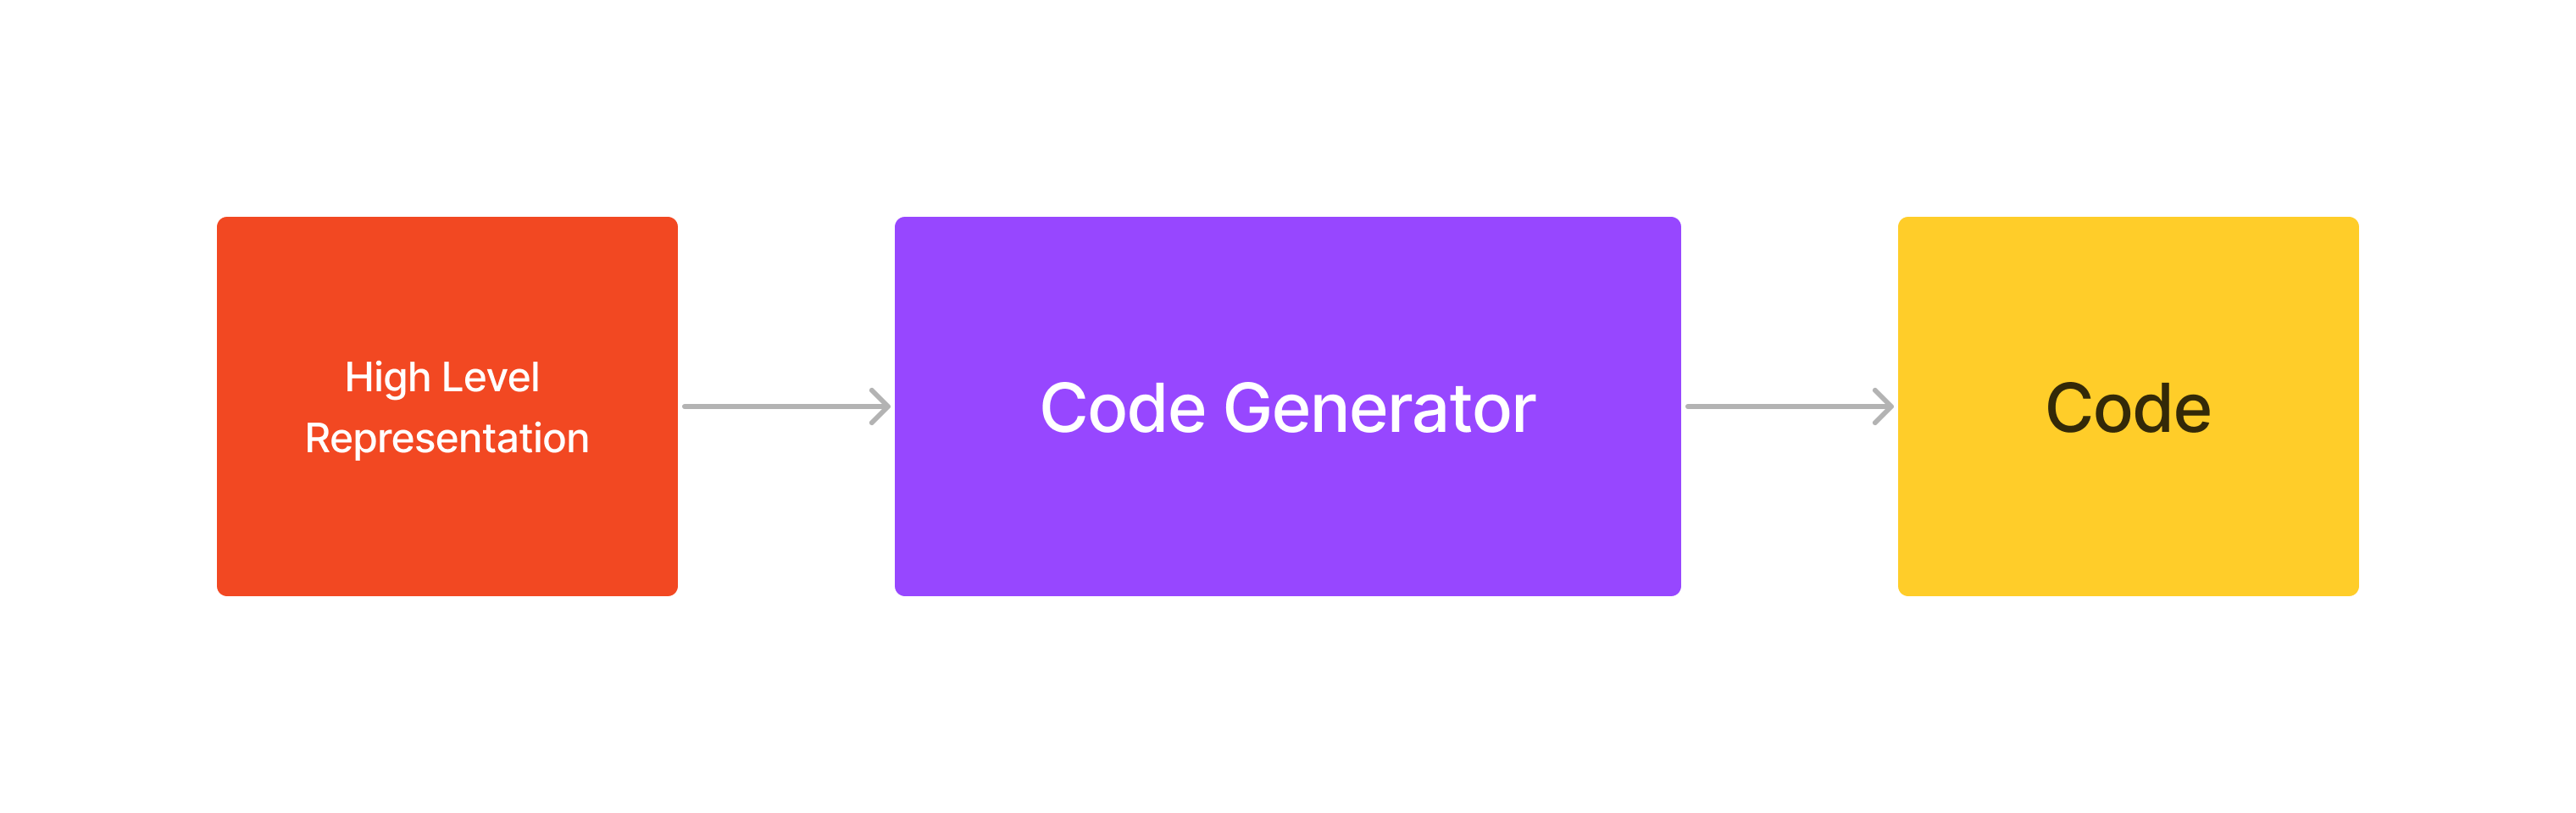 Code generators transform high level representations to code